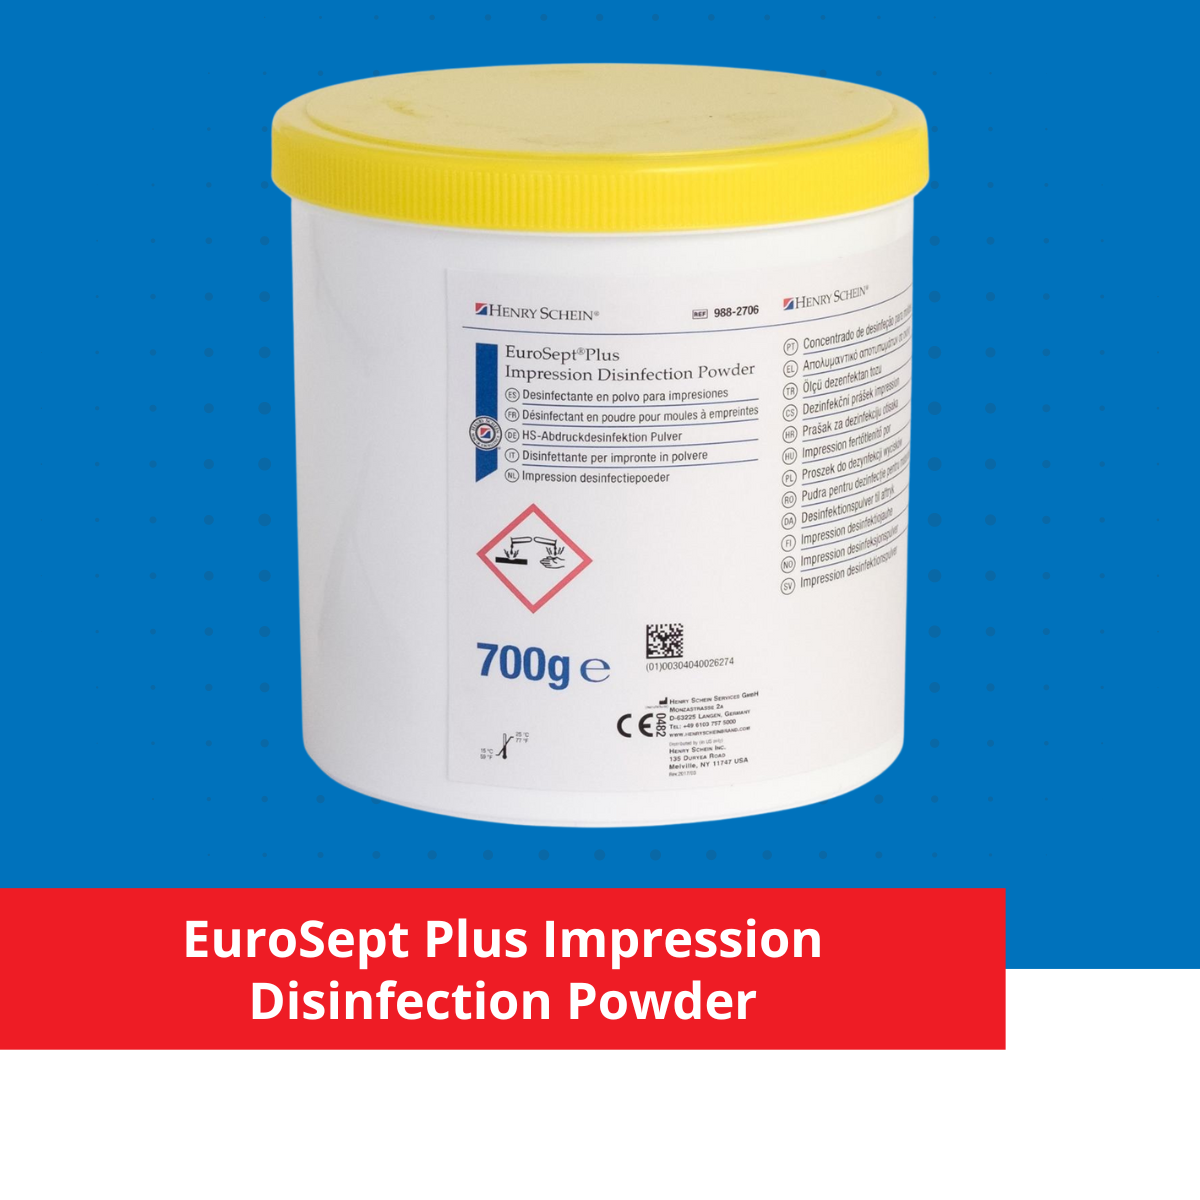 EuroSept Plus Impression Disinfection Powder